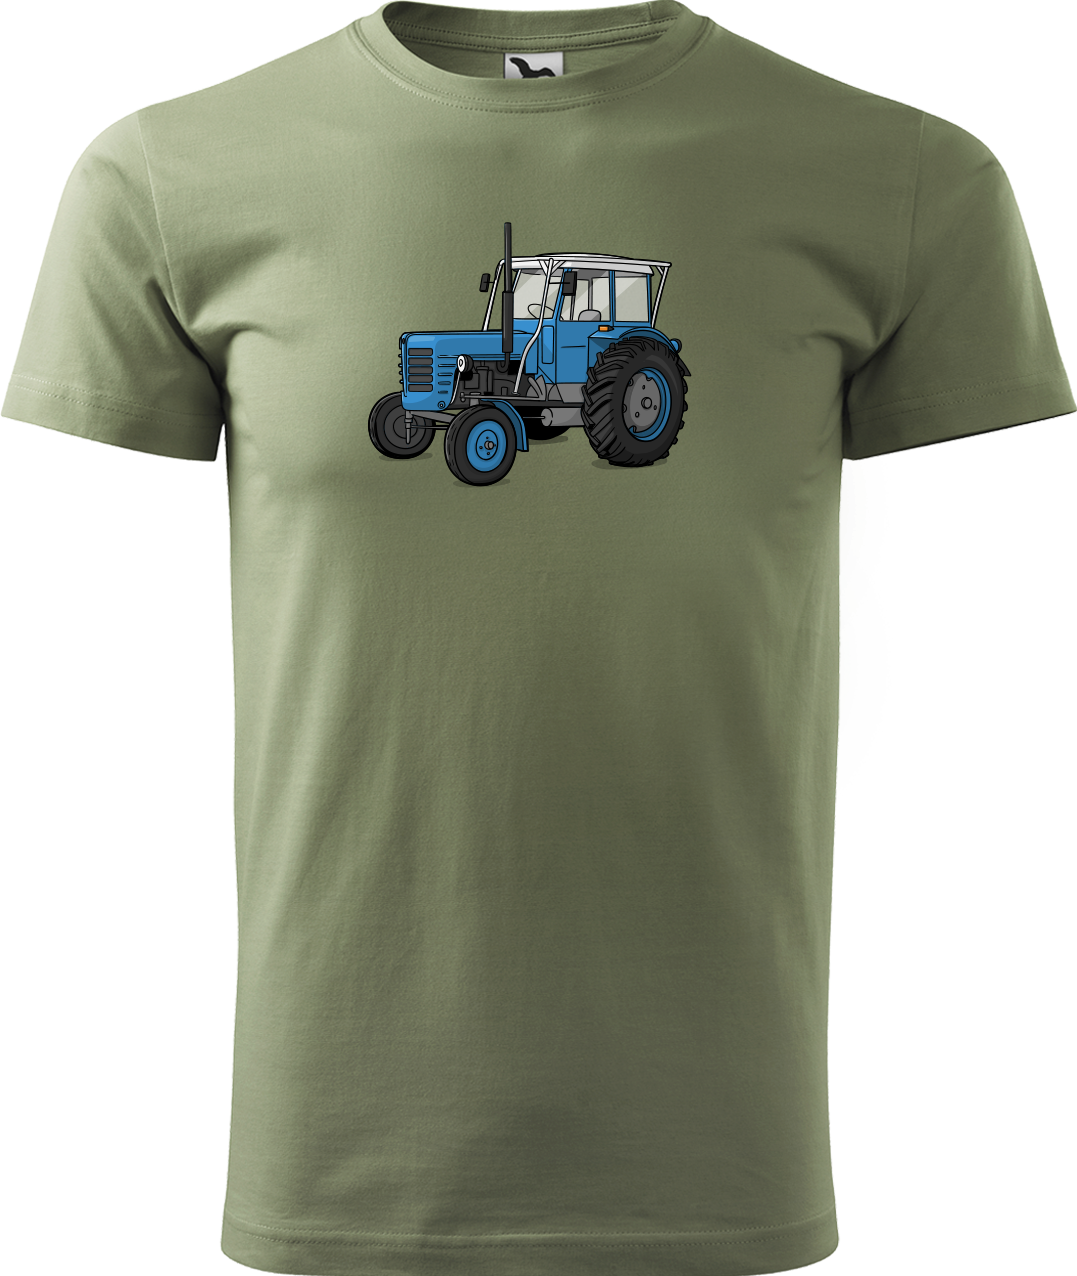 Tričko s traktorem - Starý traktor Velikost: XL, Barva: Světlá khaki (28)